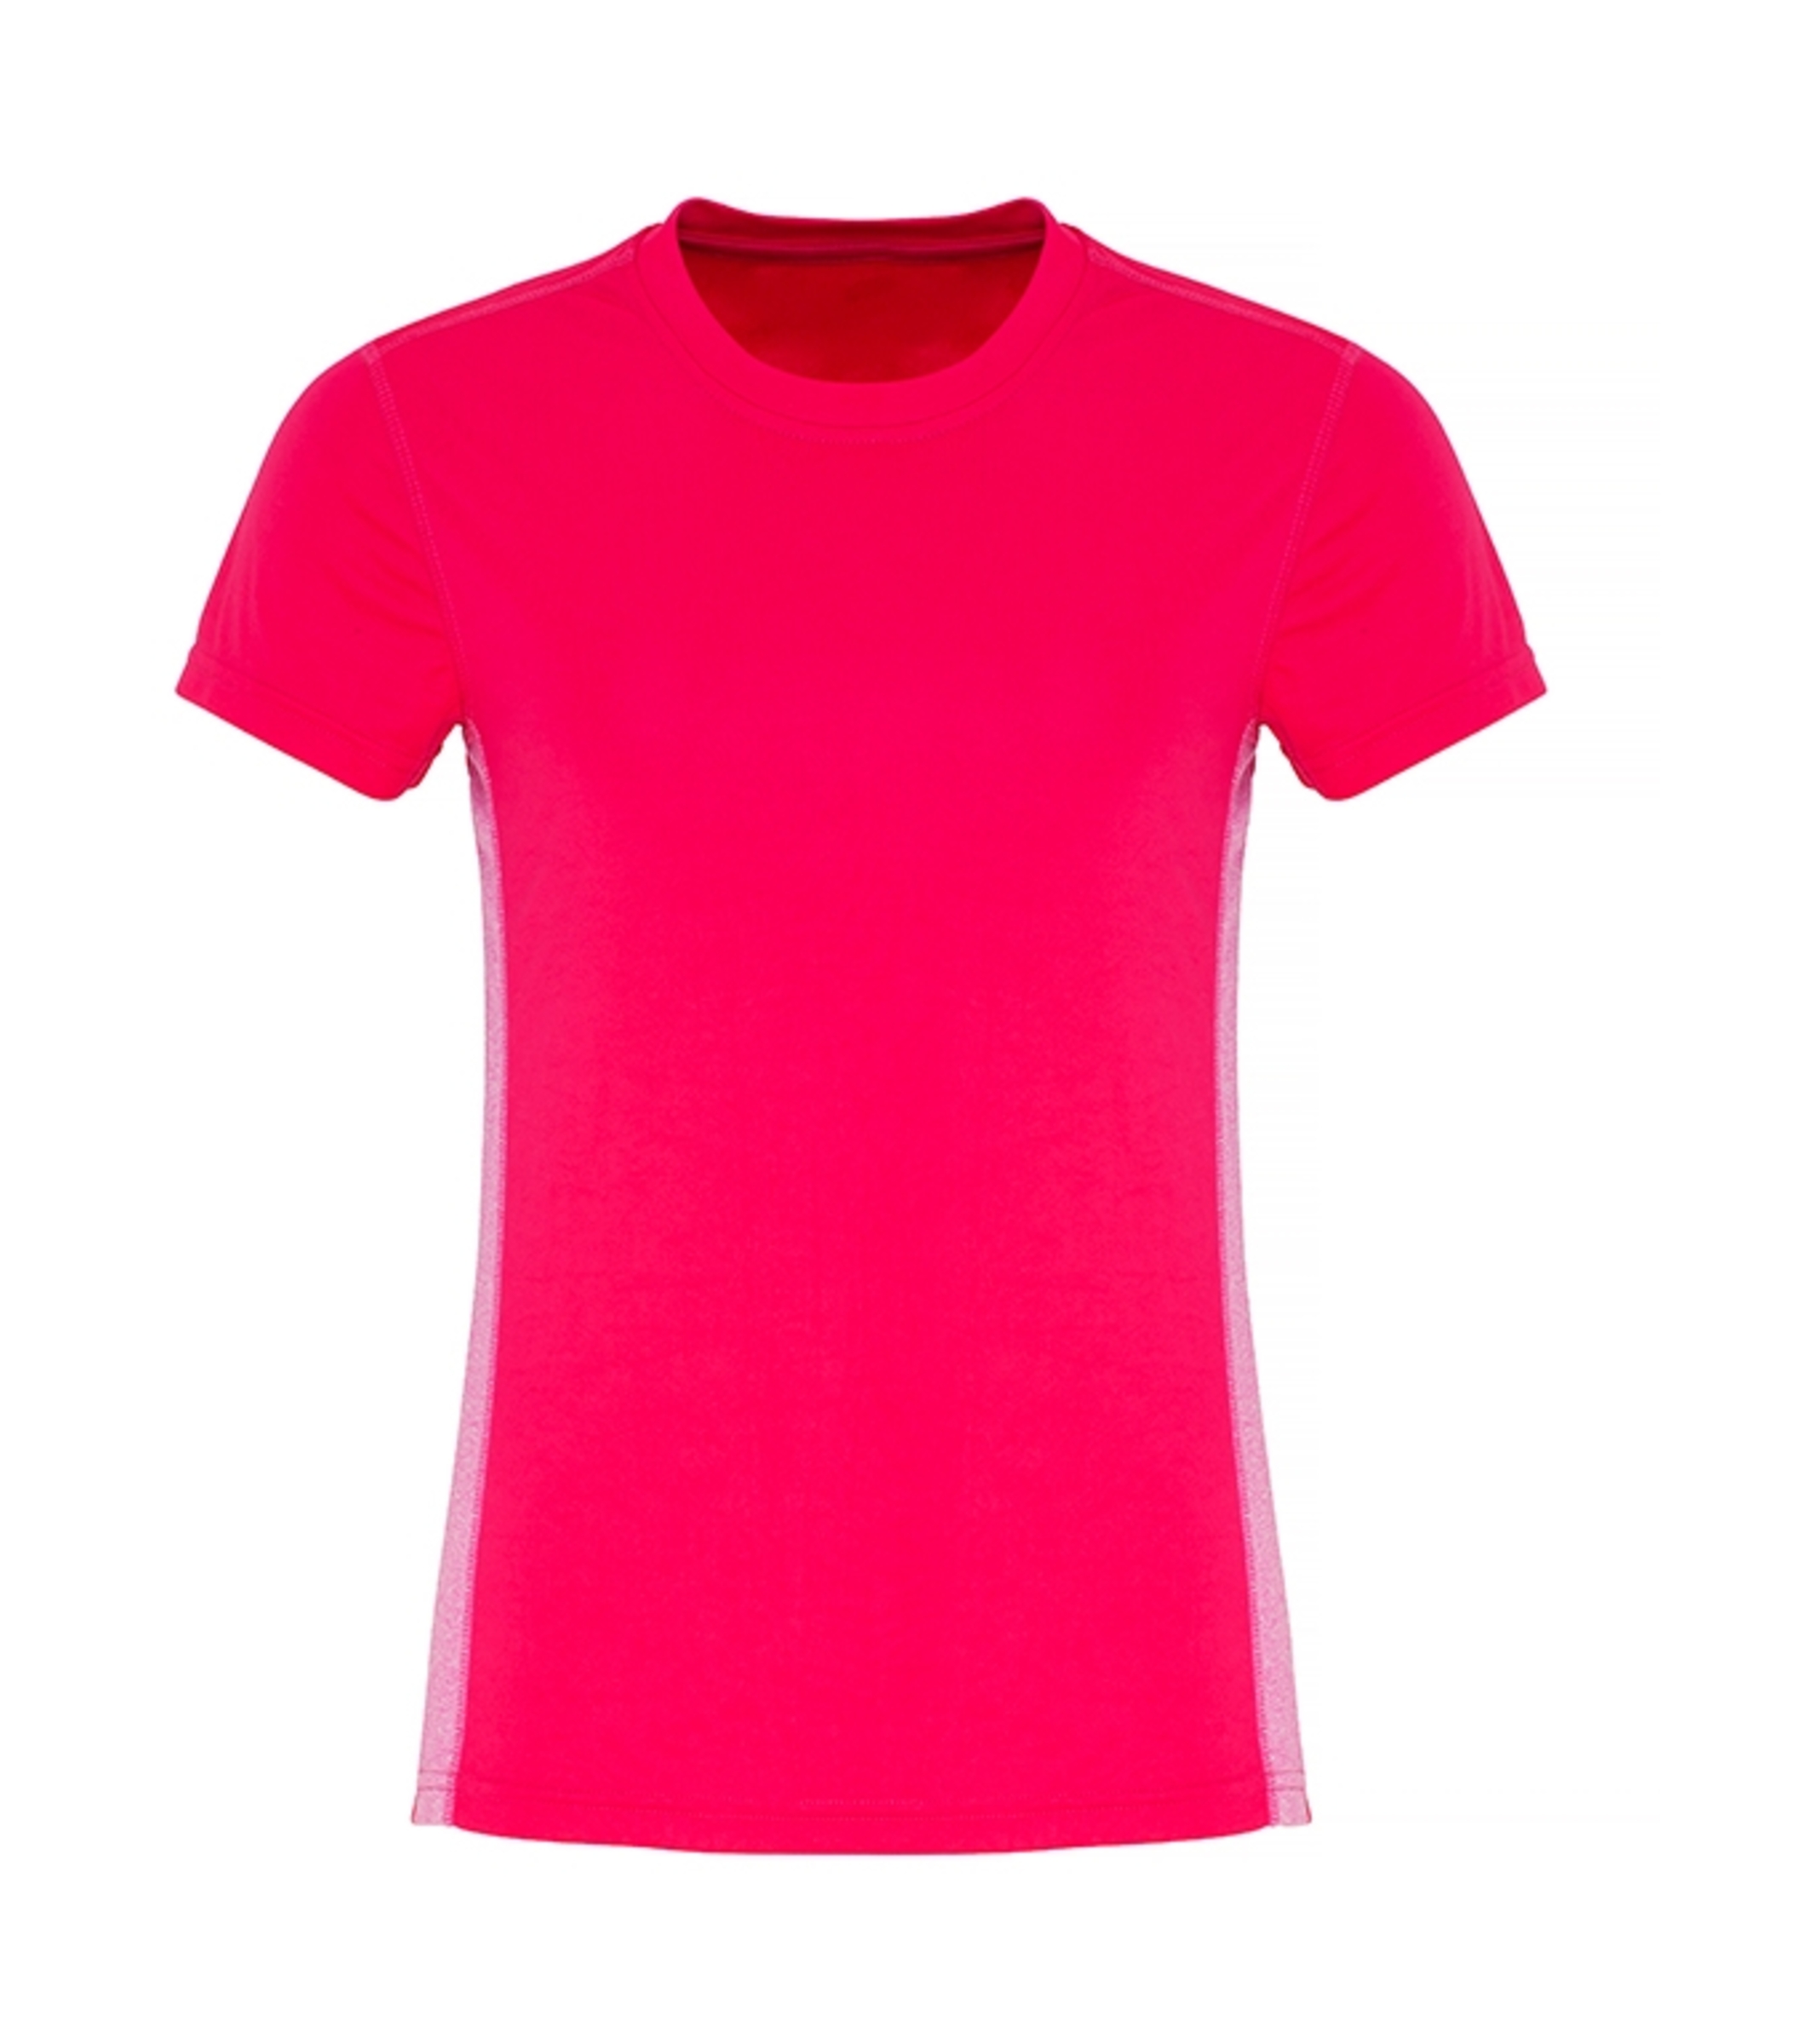 Tri Dri Ladies Tridri ® Contrast Panel Performance Tshirt - Hot Pink/Pink Melange - Xs